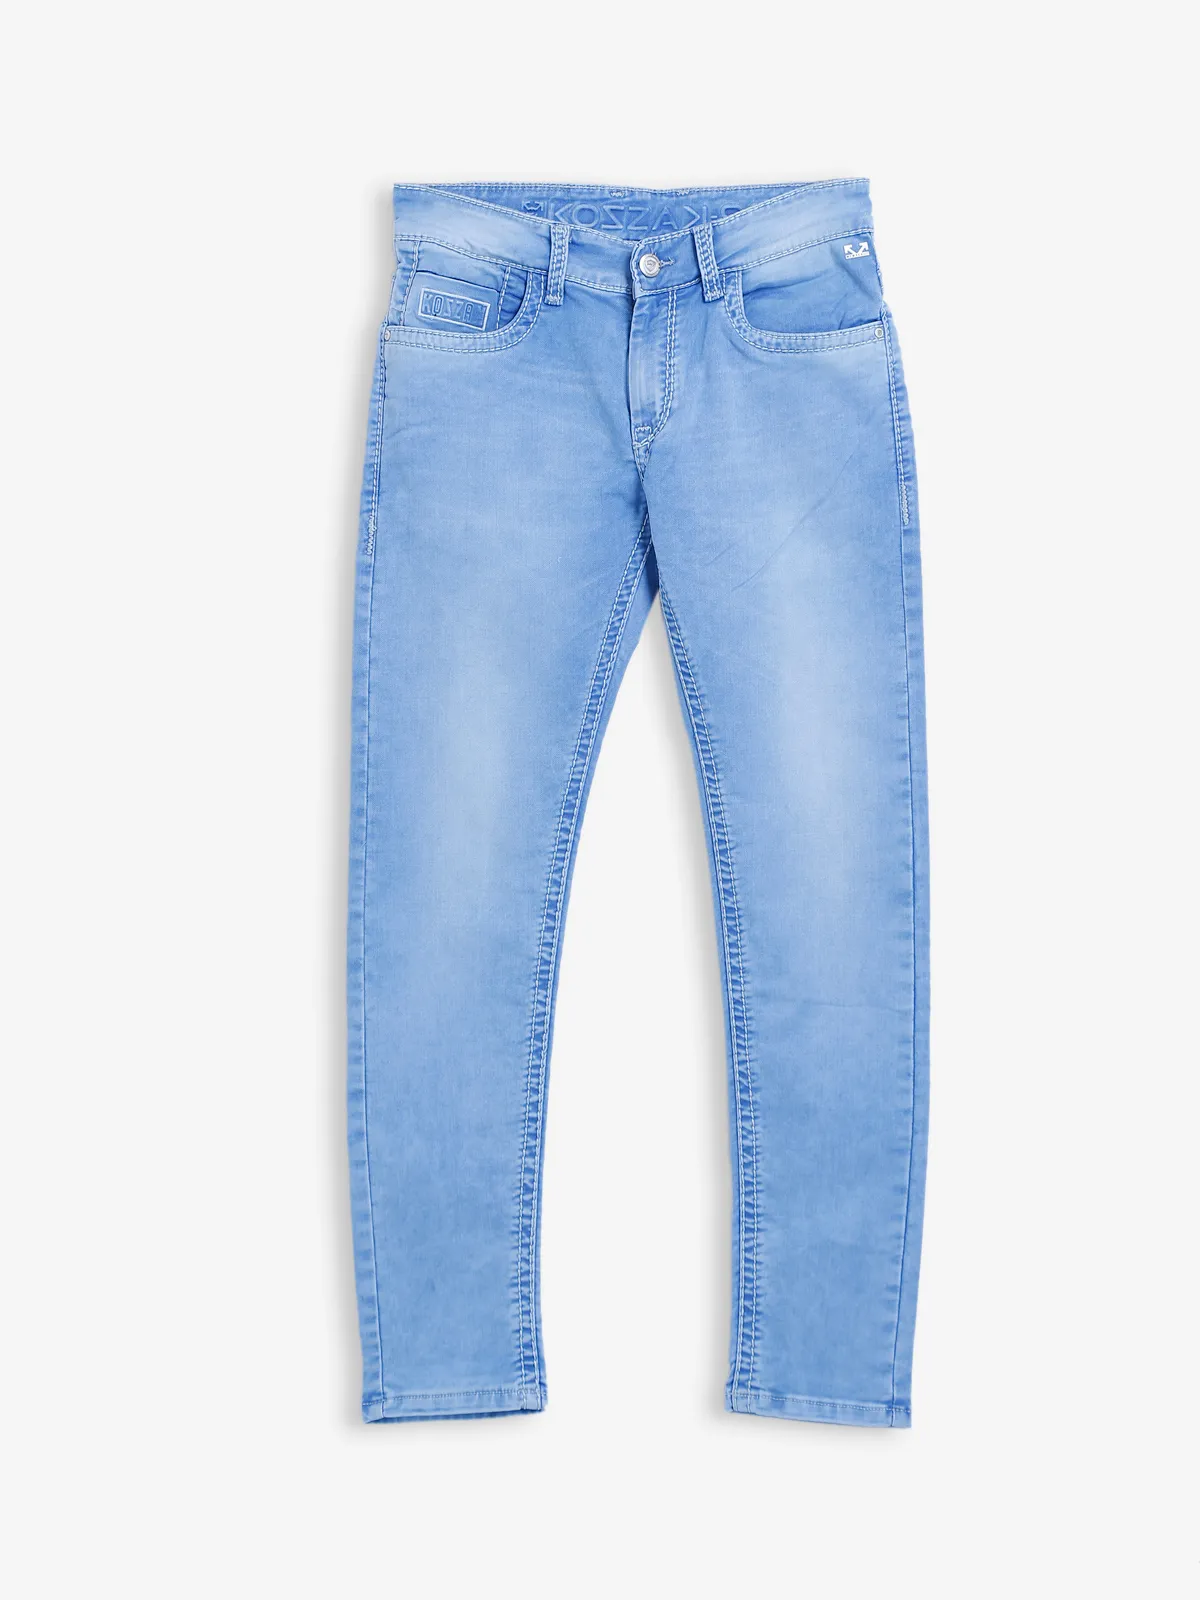 Kozzak ice blue super skinny fit jeans